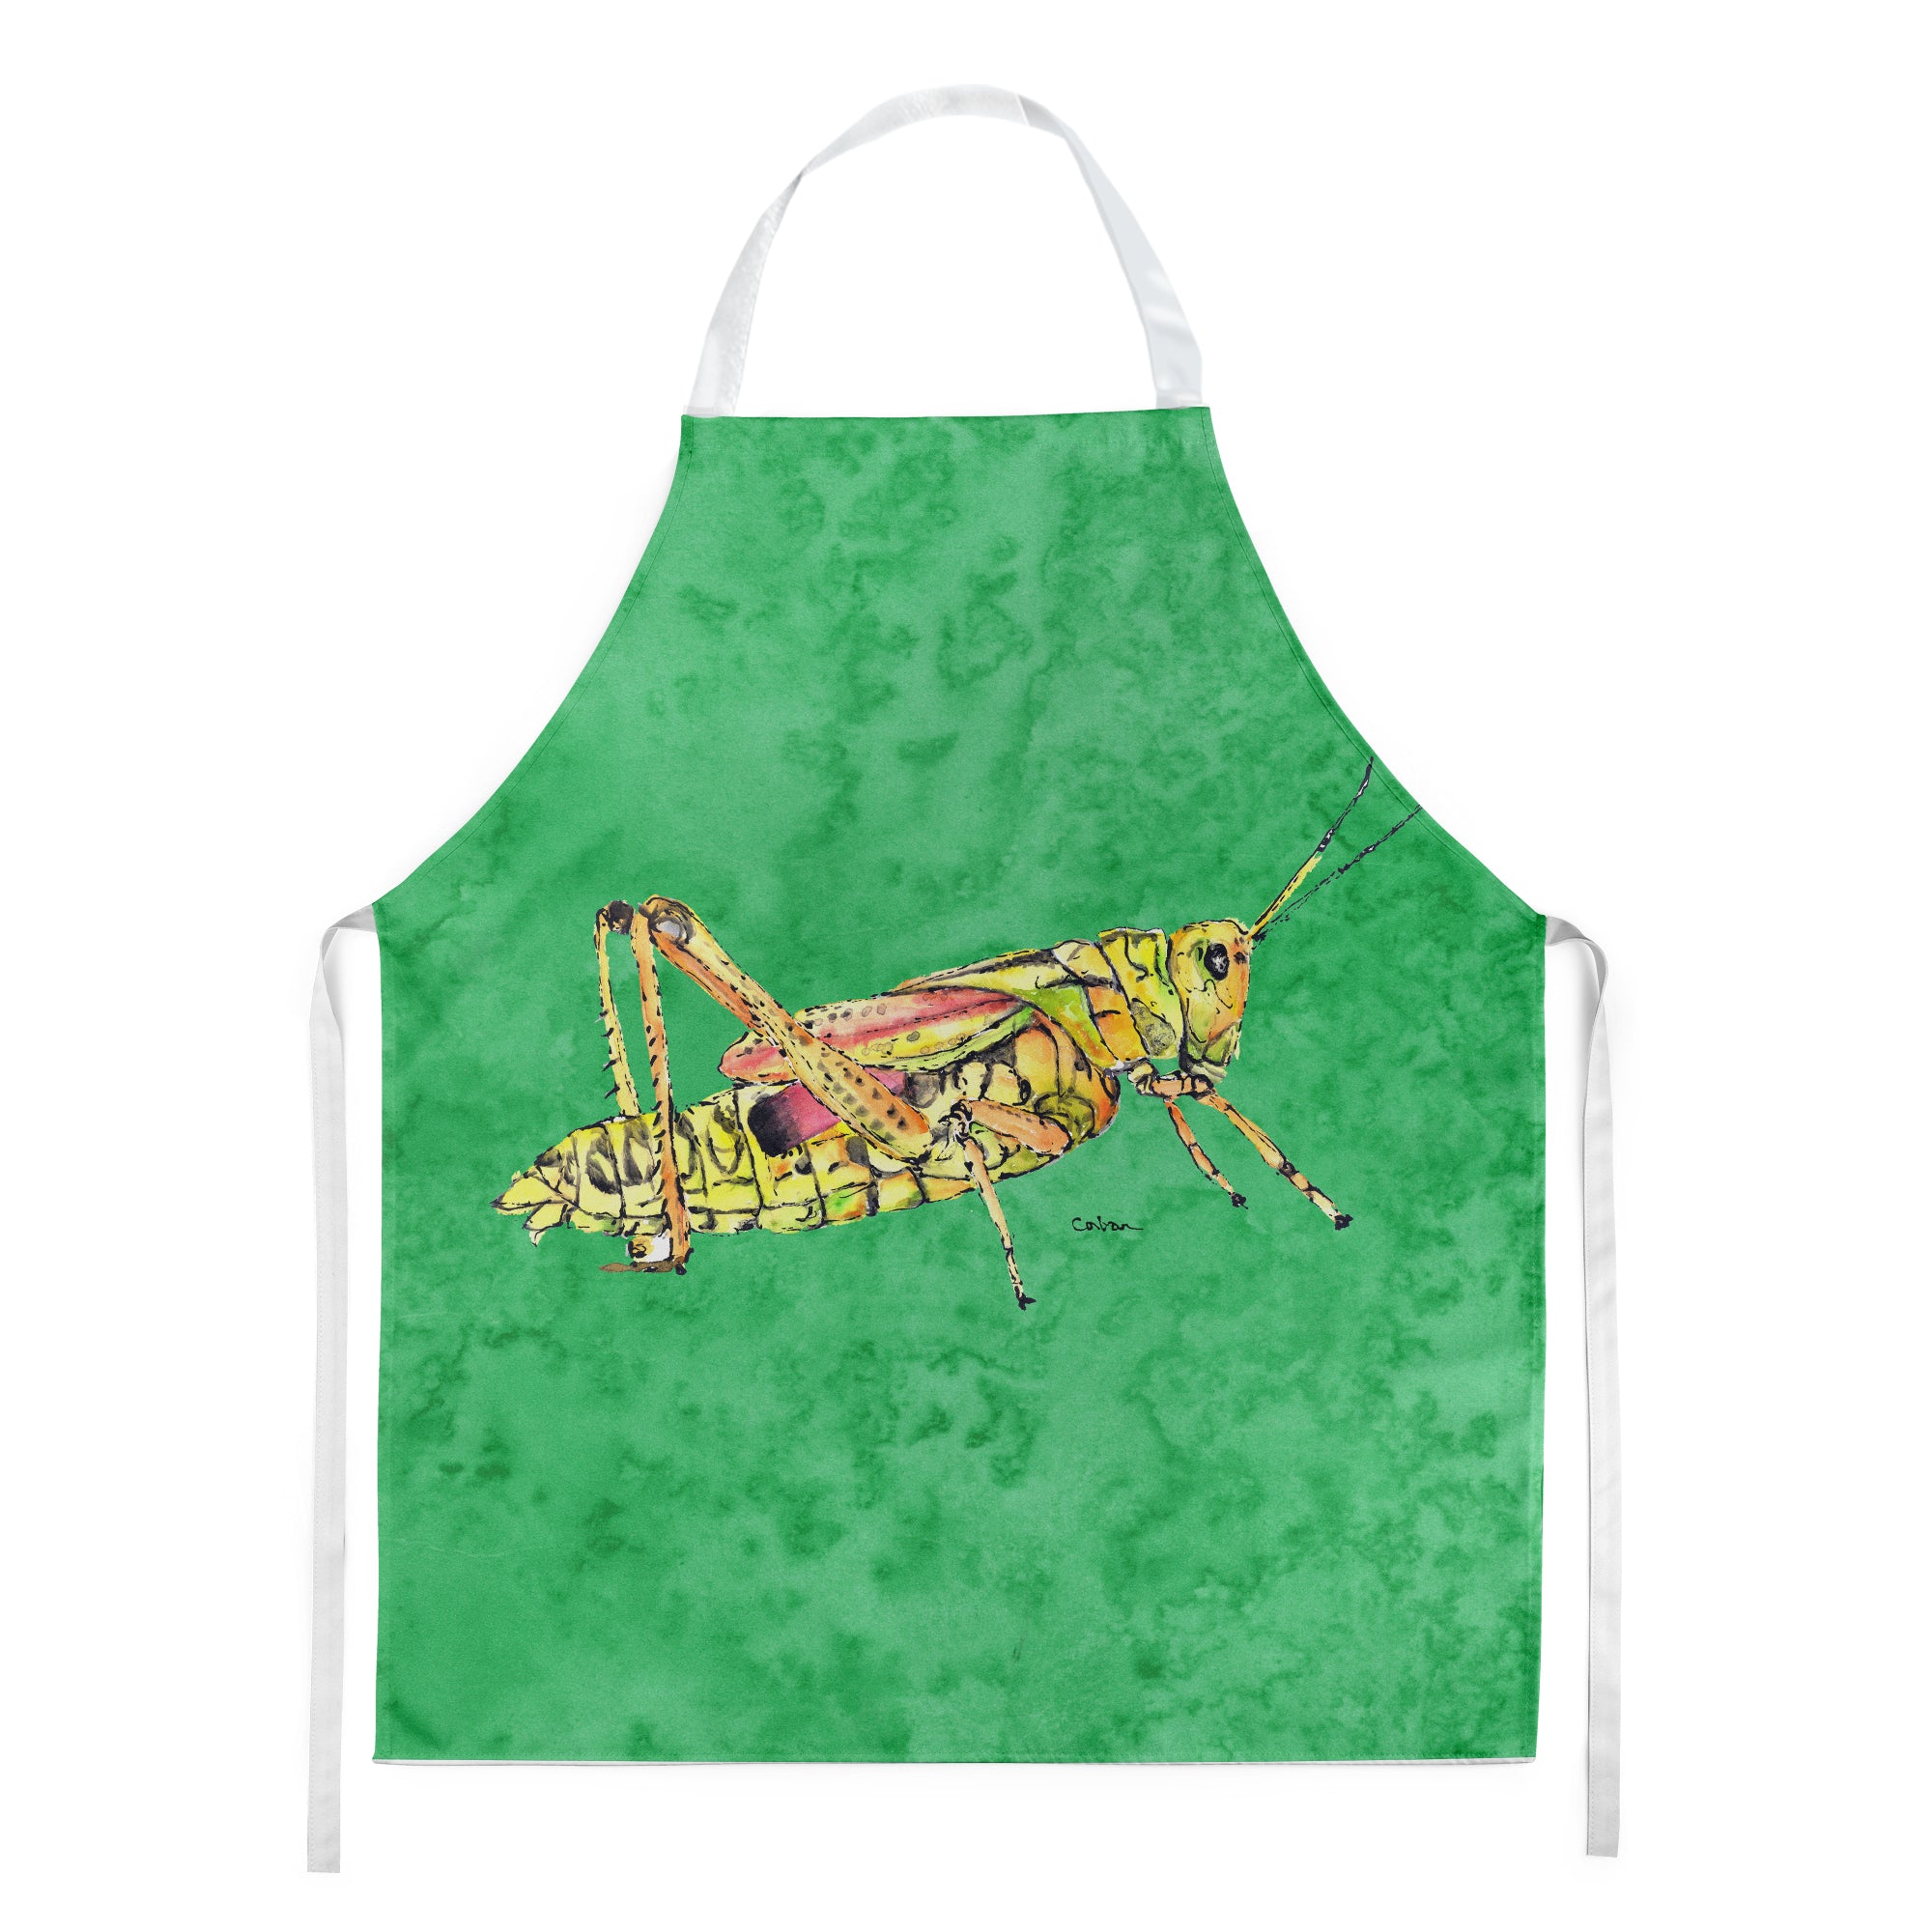 Grasshopper on Green Apron